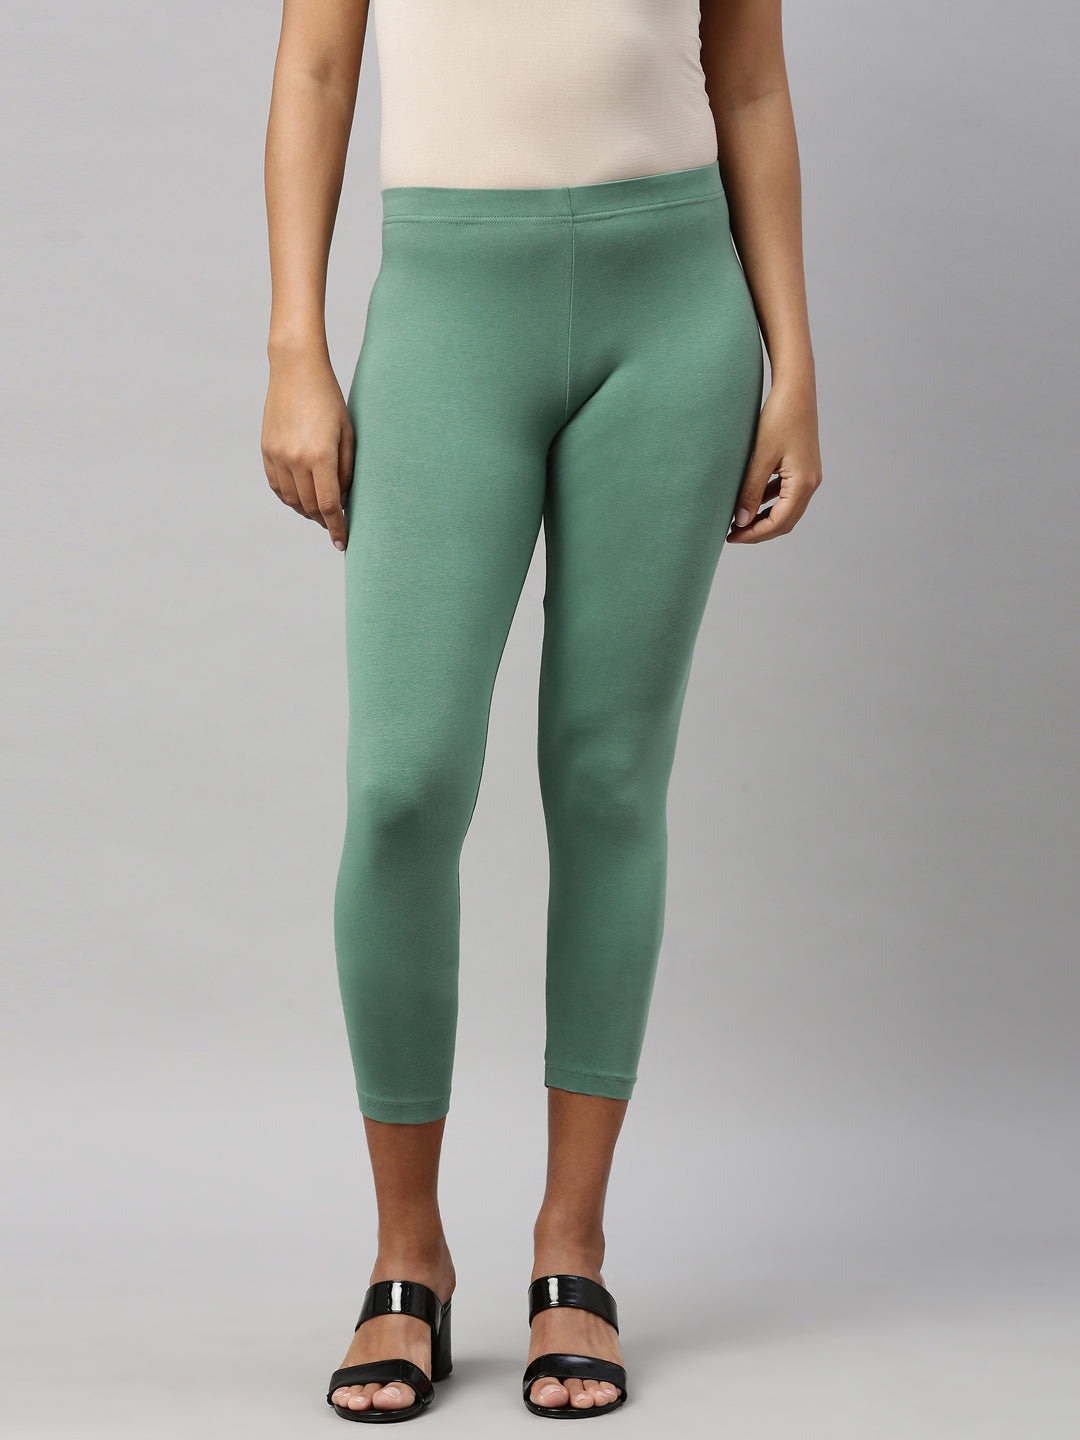 Buy Flexica Women's Neon Green Cotton Lycra Ankle Legging at Amazon.in